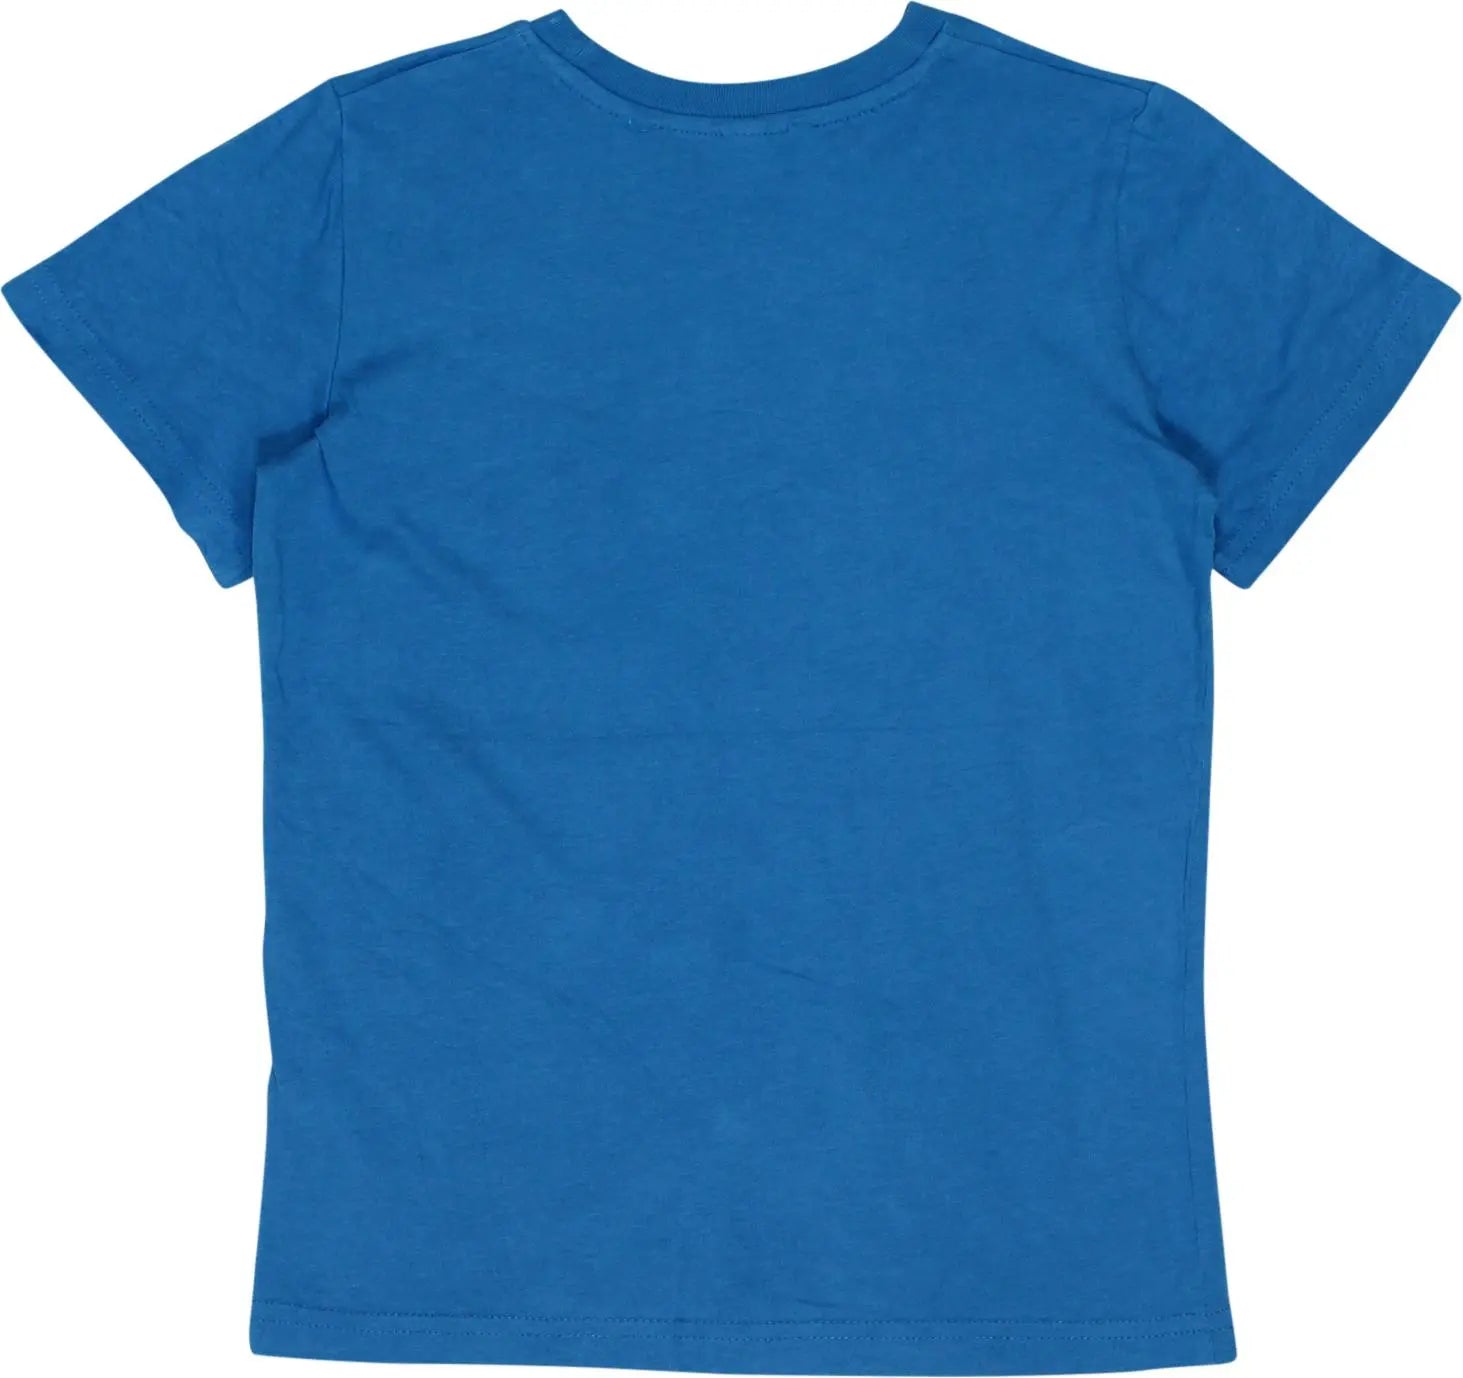 Esprit - Blue T-shirt- ThriftTale.com - Vintage and second handclothing